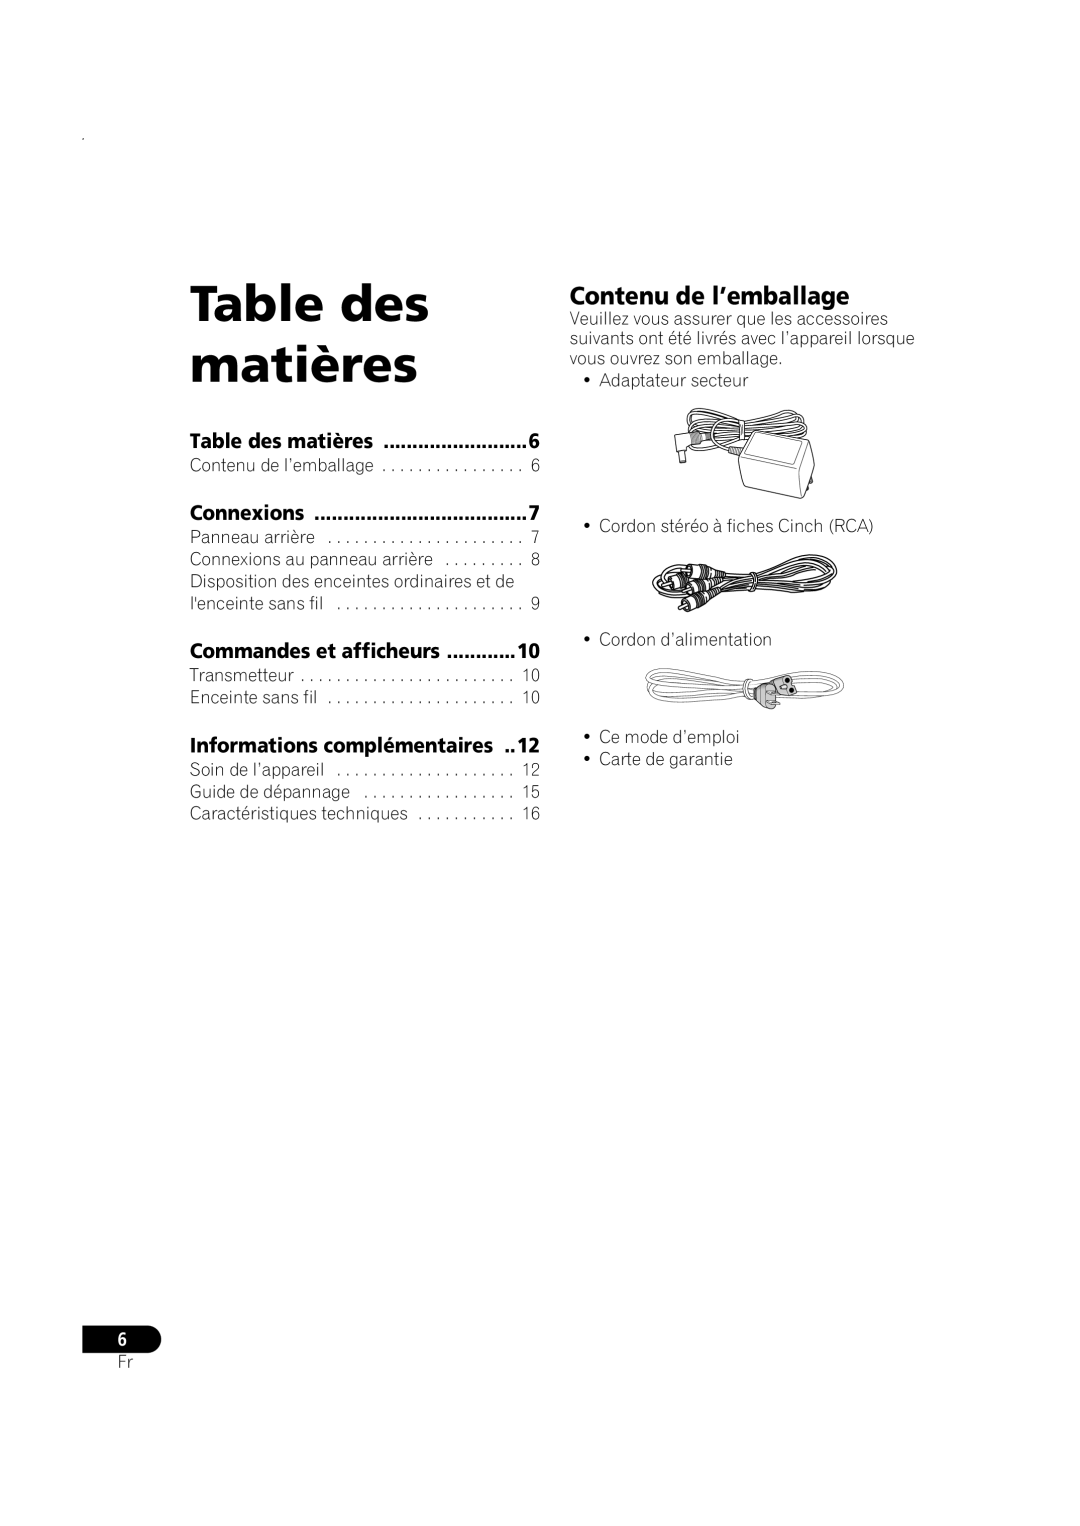 Pioneer XW-HTP550 manual Table des matières, Contenu de l’emballage, Informations complémentaires, Connexions 